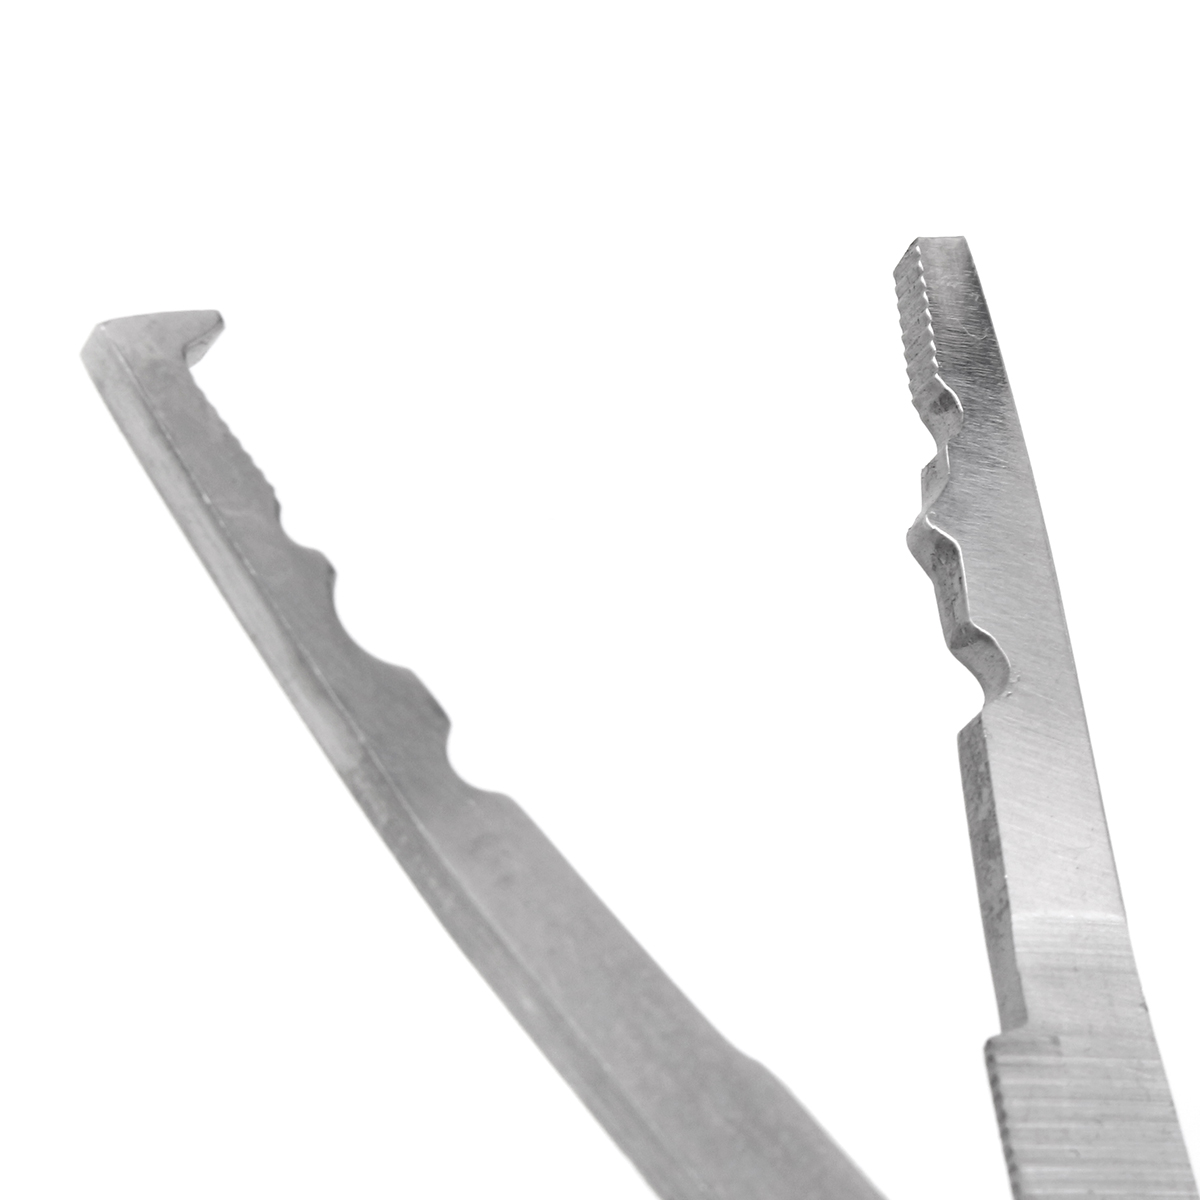 Stainless-Steel-Fishing-Pliers-Plierweiter-Scissors-Line-Cutter-Hook-Tackle-Tool-1151463